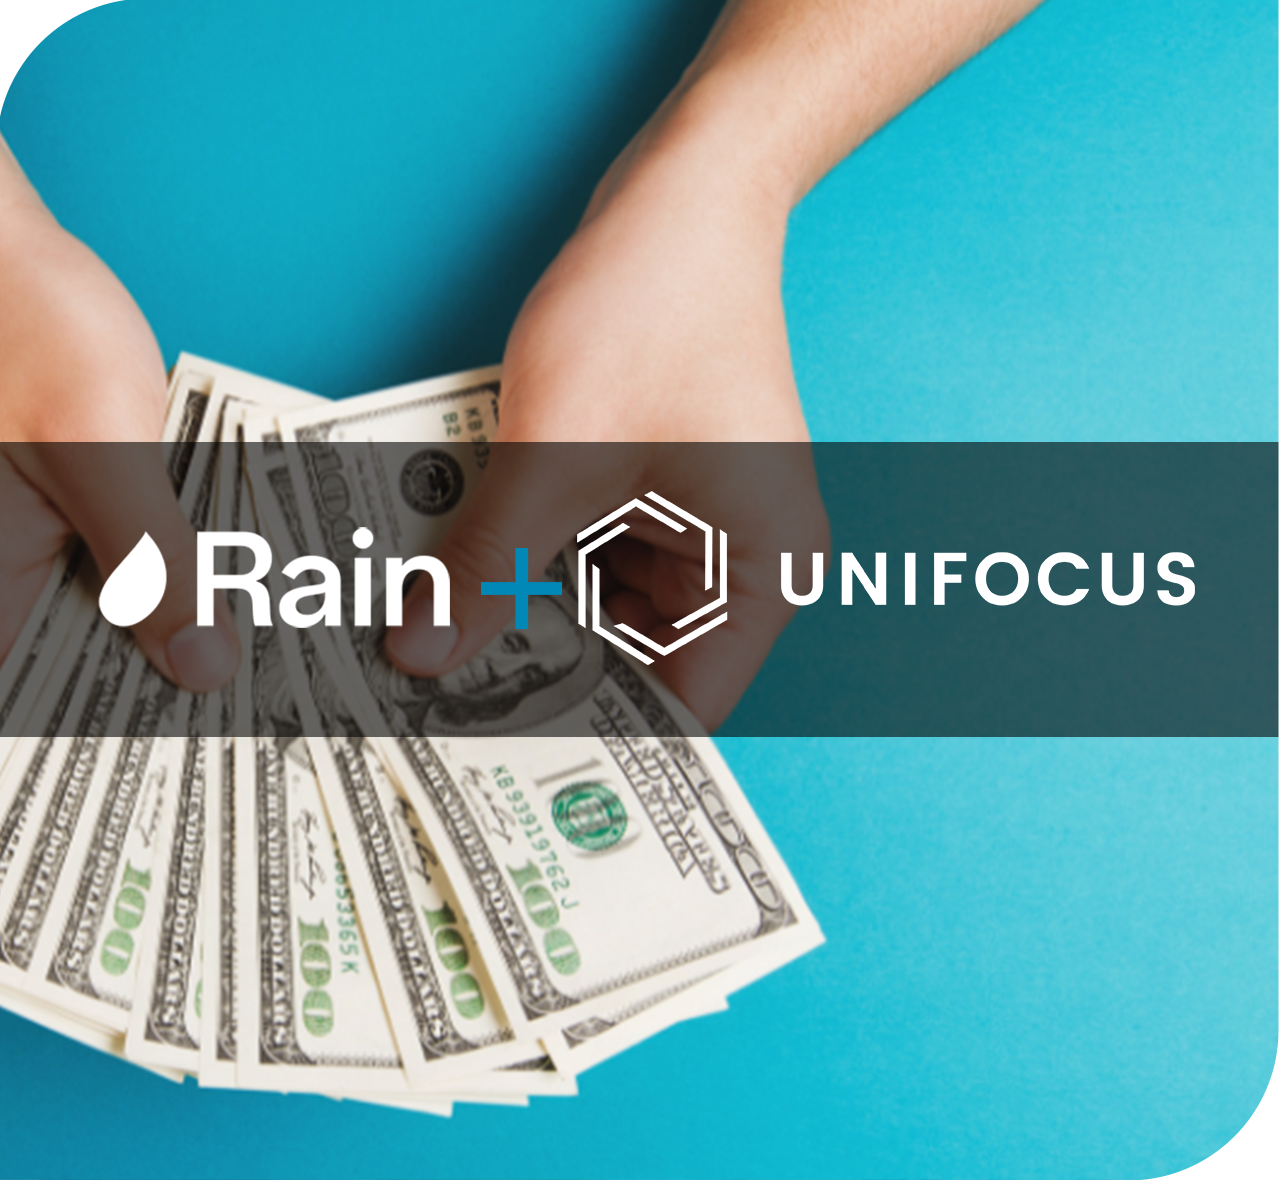 UniFocus and Rain Pay